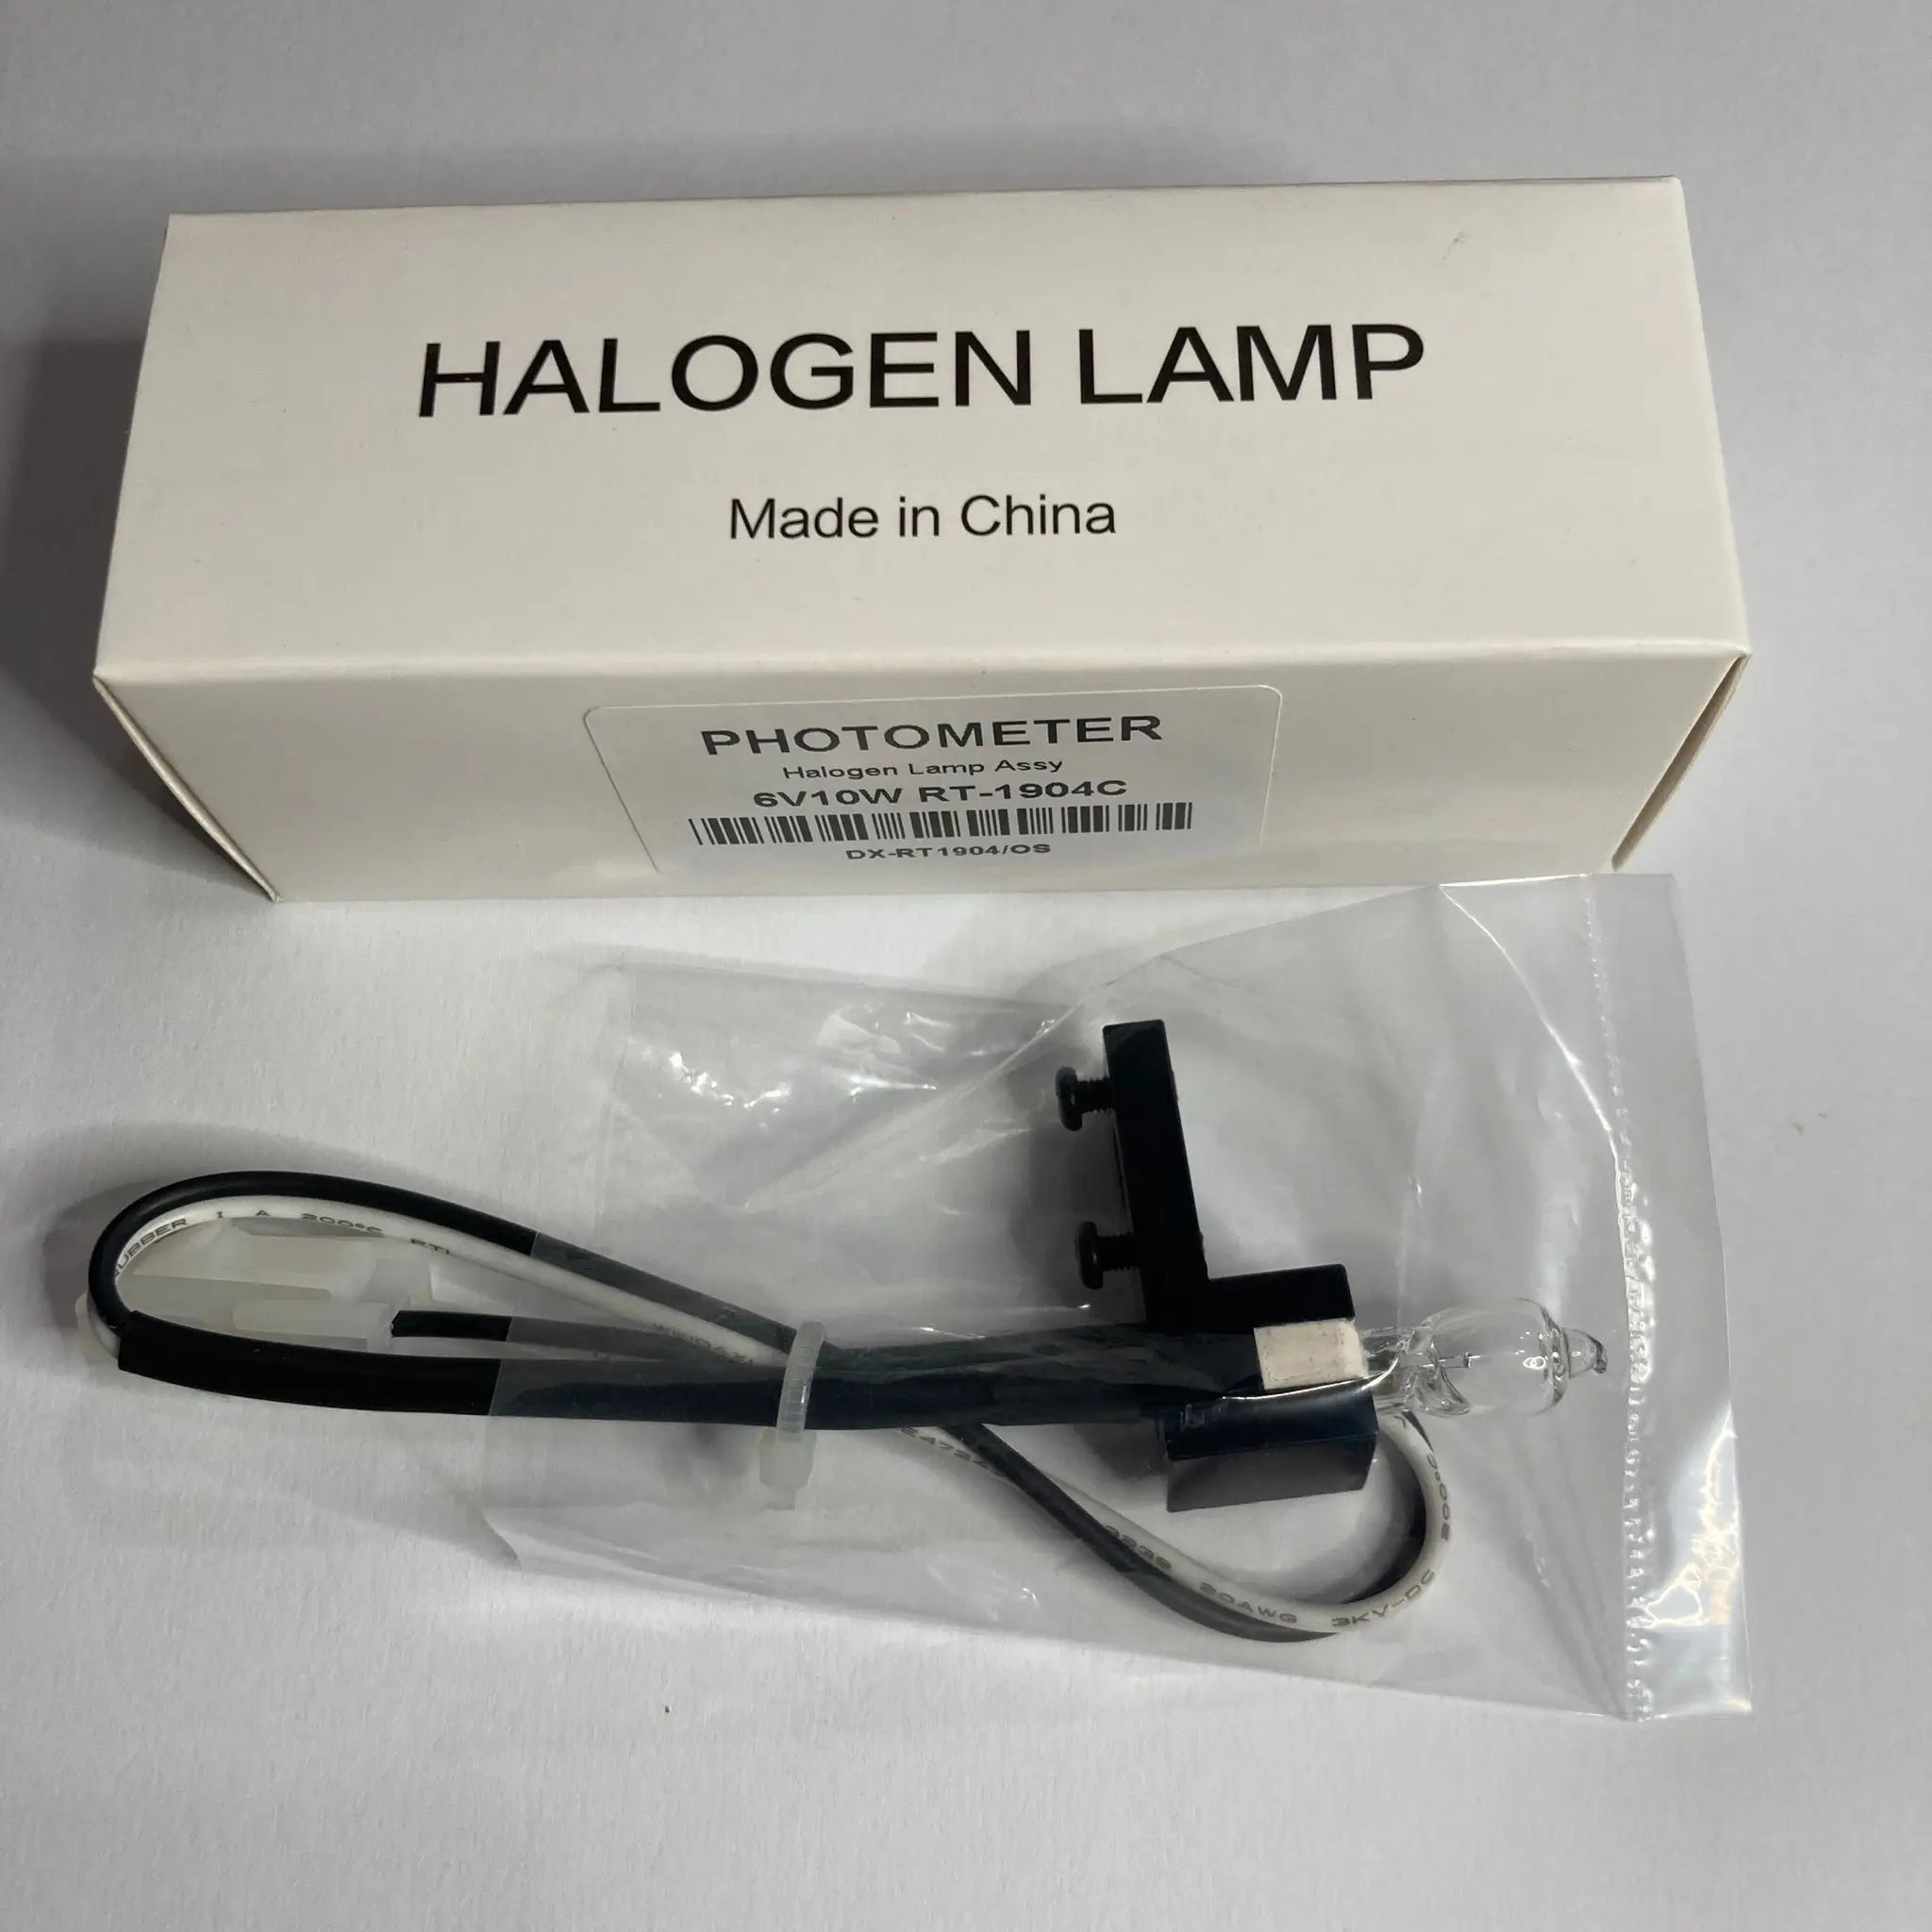 Compatible halogen lamp Bulb for Rayto RT1904 RT-1904 RT1904C RT-1904C RT 1904C RT9000 RT-9000 RT9200 RT-9200 6V10W - Compatible halogen lamp Bulb for Rayto  Price in Pakistan